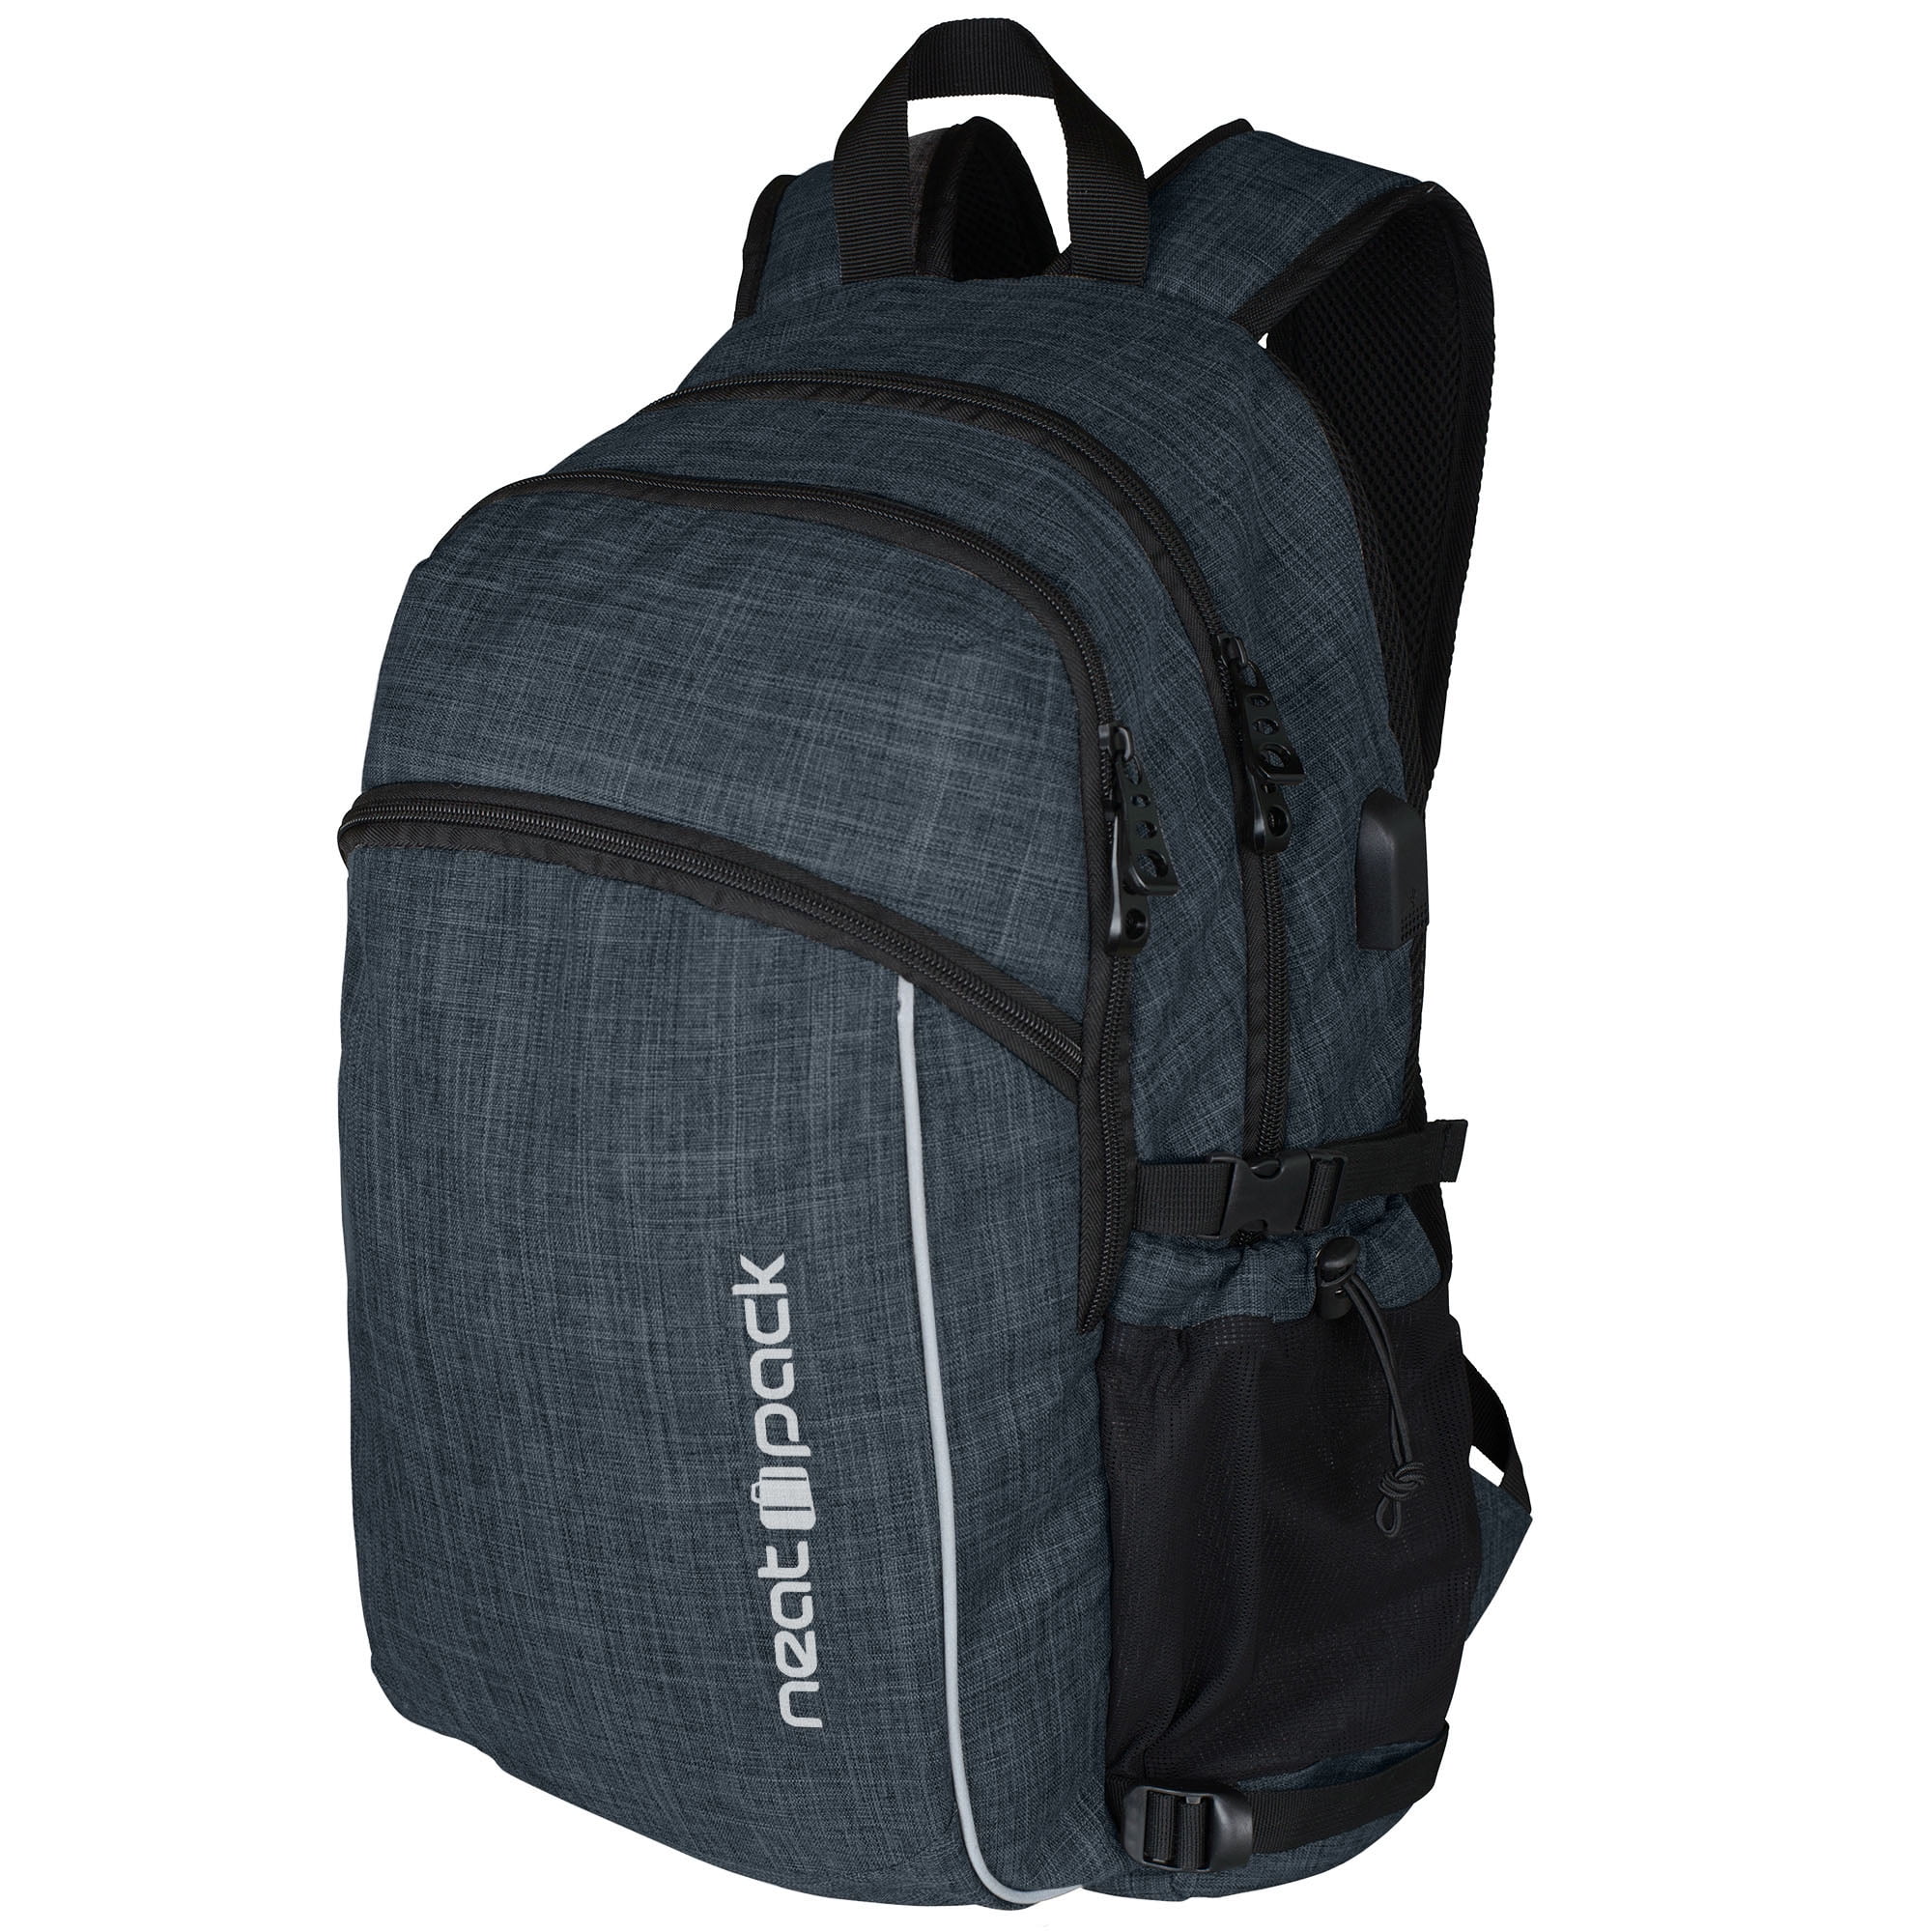 NeatPack laptop backpack with USB port, black - Walmart.com